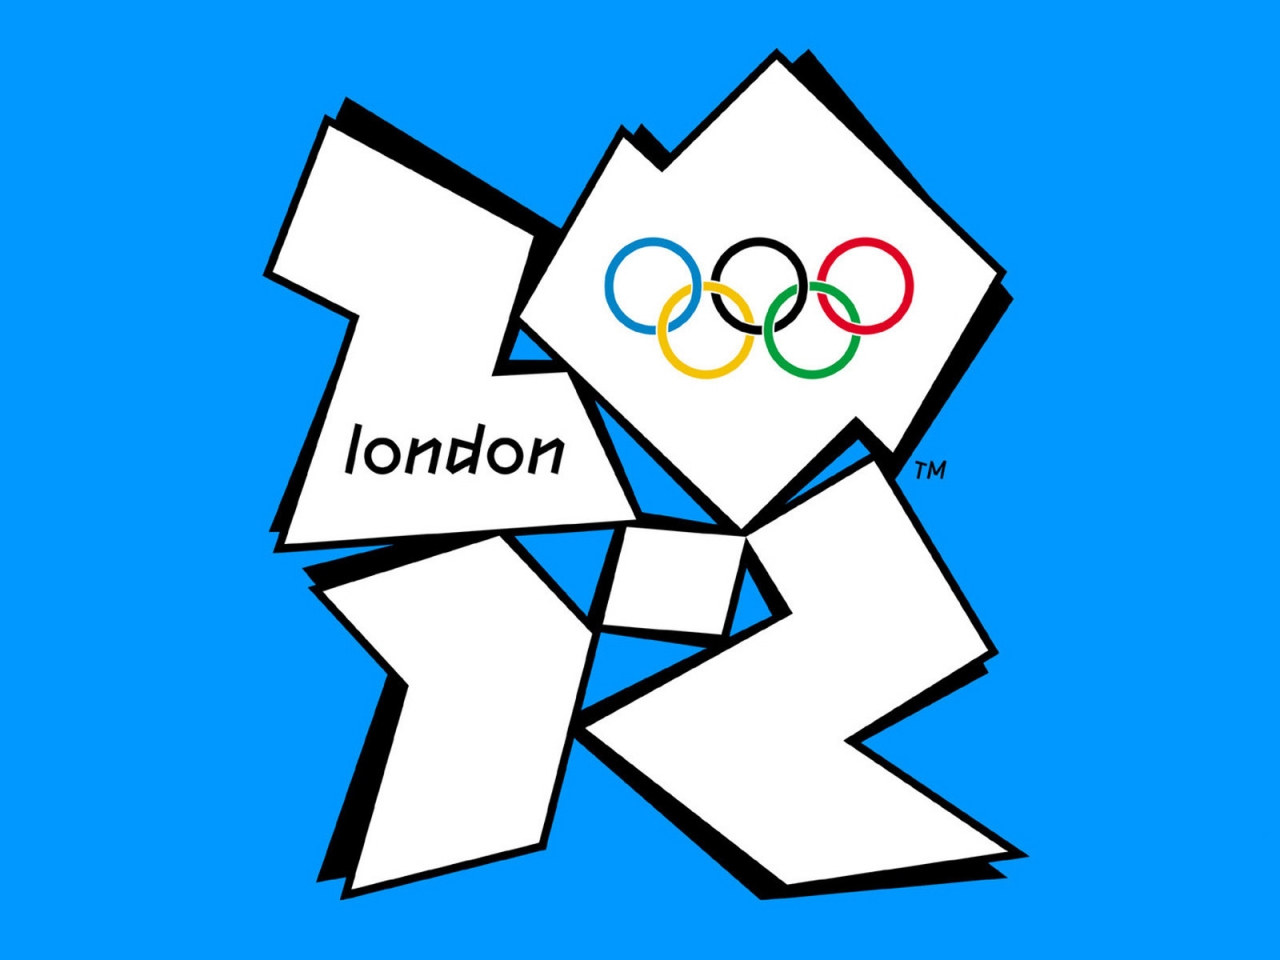 London 2012 Olympics Logo for 1280 x 960 resolution